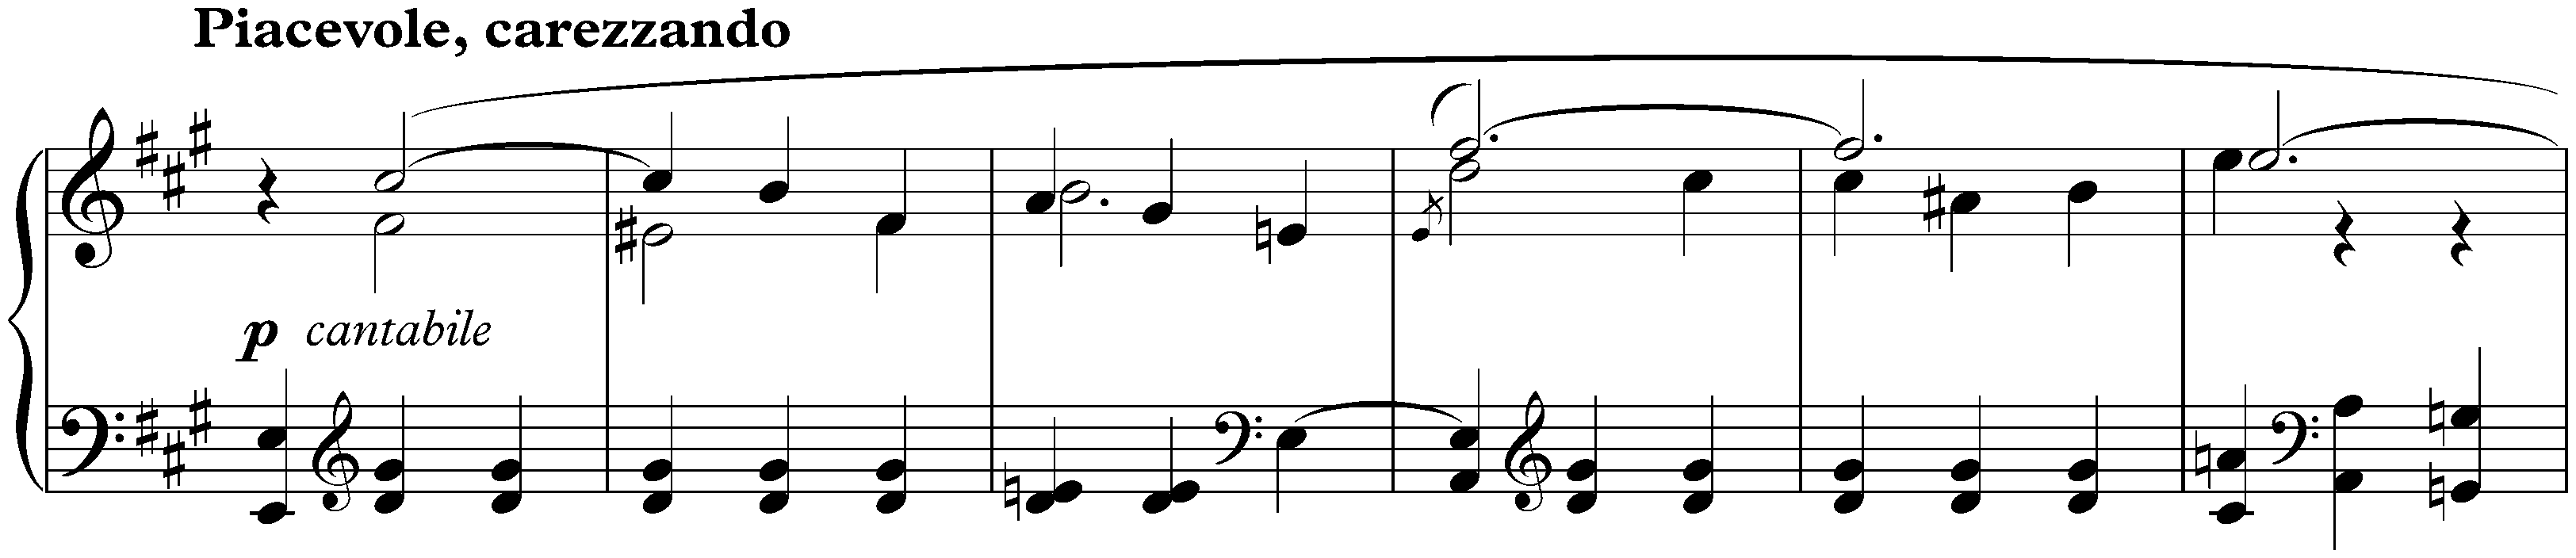 Valse in A-flat major, op. 38